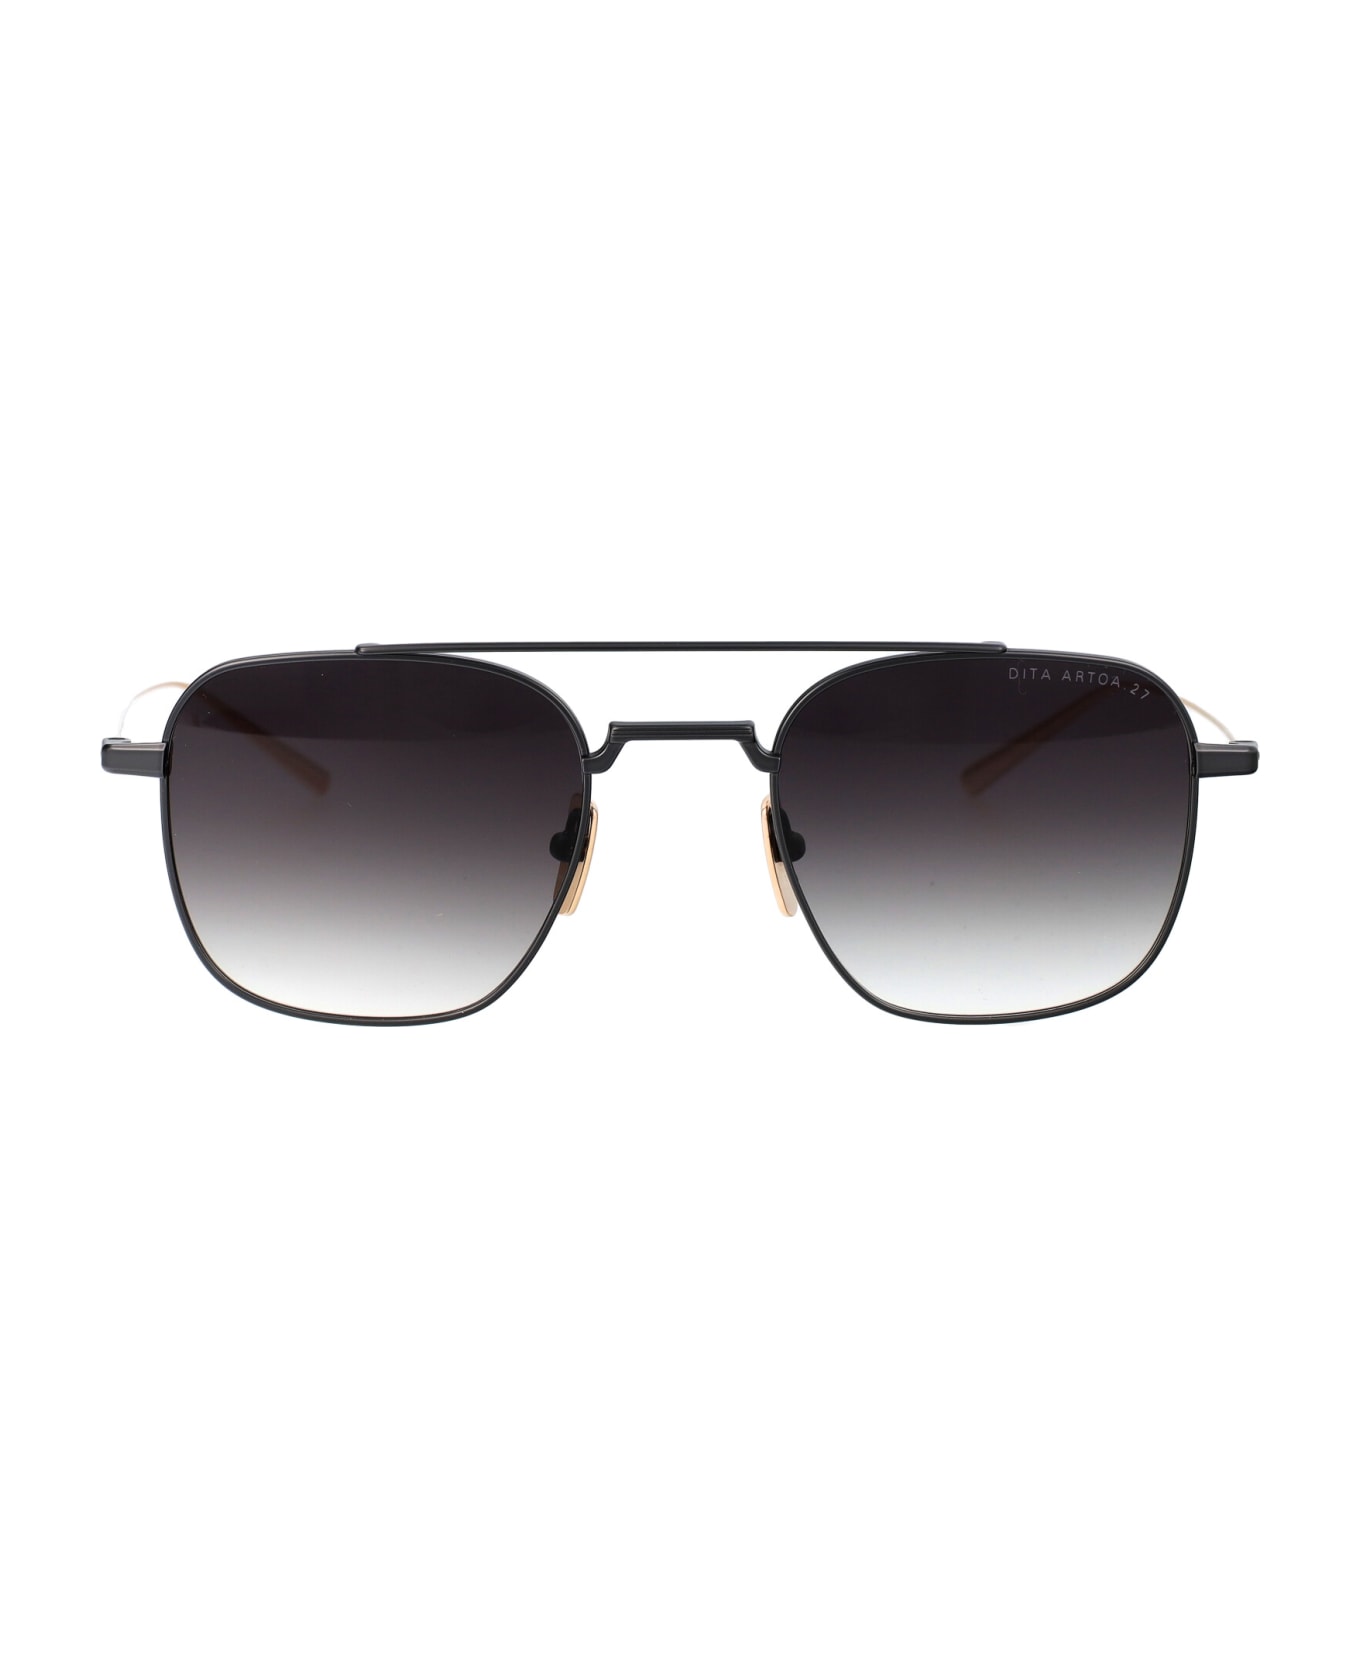 Dita Artoa.27 Sunglasses - 02 Black Iron - White Gold w/ Grey to Clear Gradie